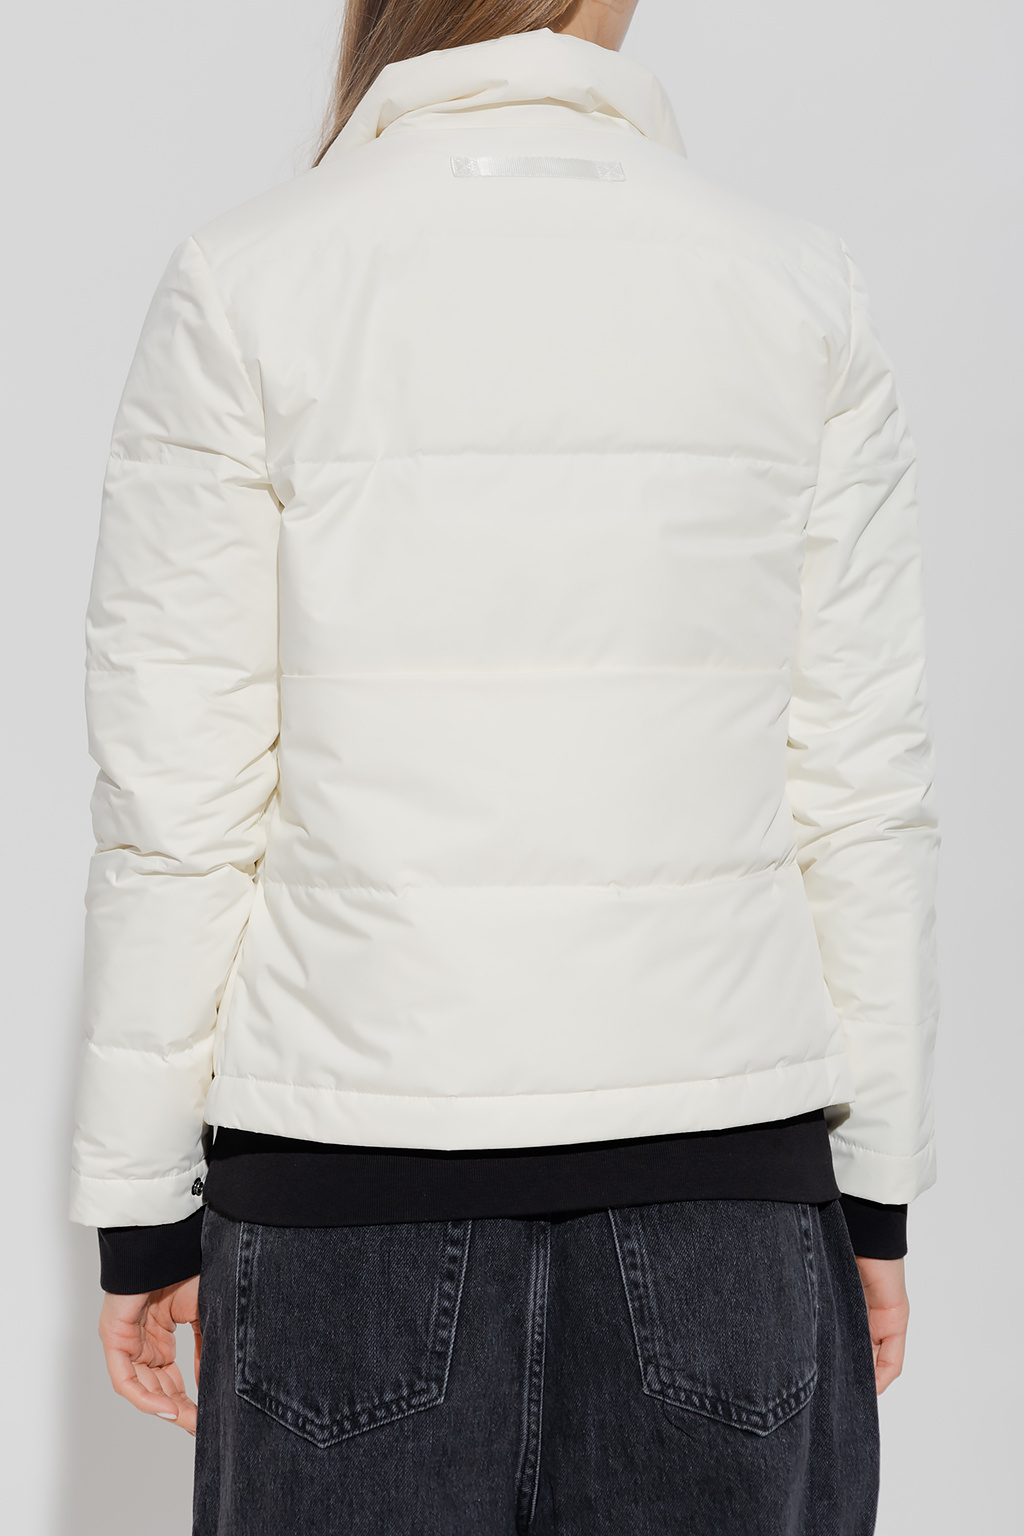 Yves salomon Colourways Reversible jacket